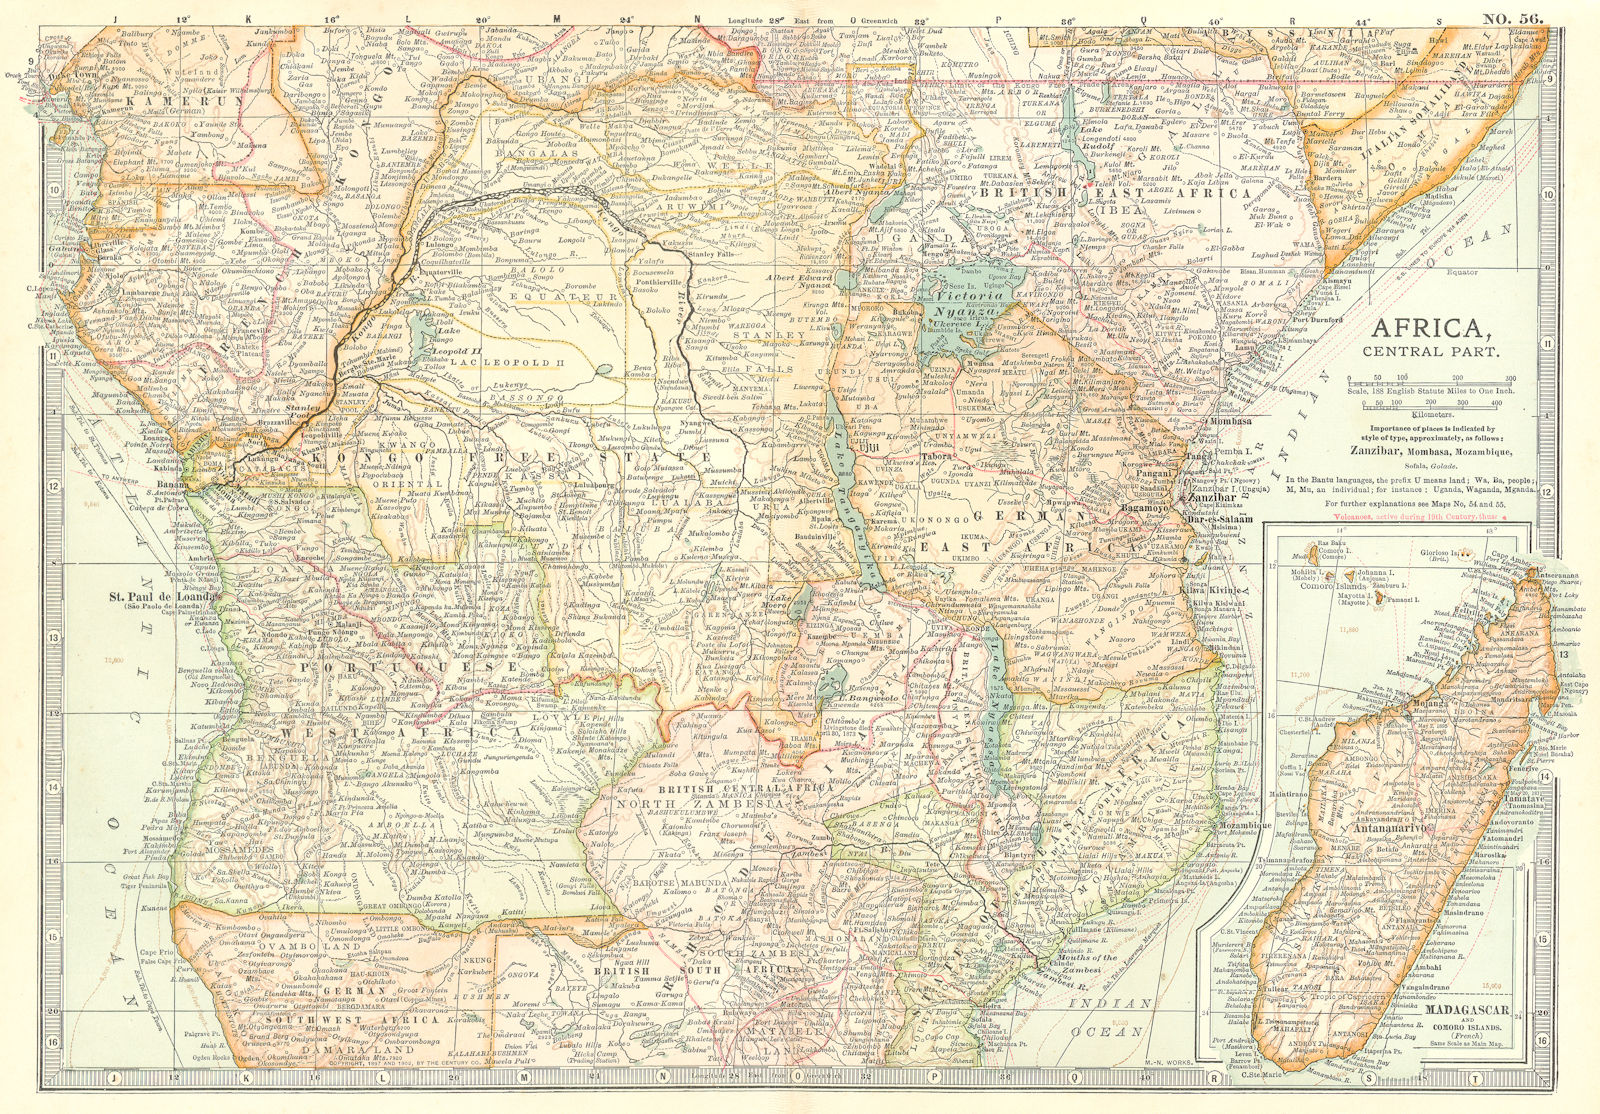 CENTRAL AFRICA. Tanzania, Kenya, Angola, Zambia, Congo, Mozambique 1903 map